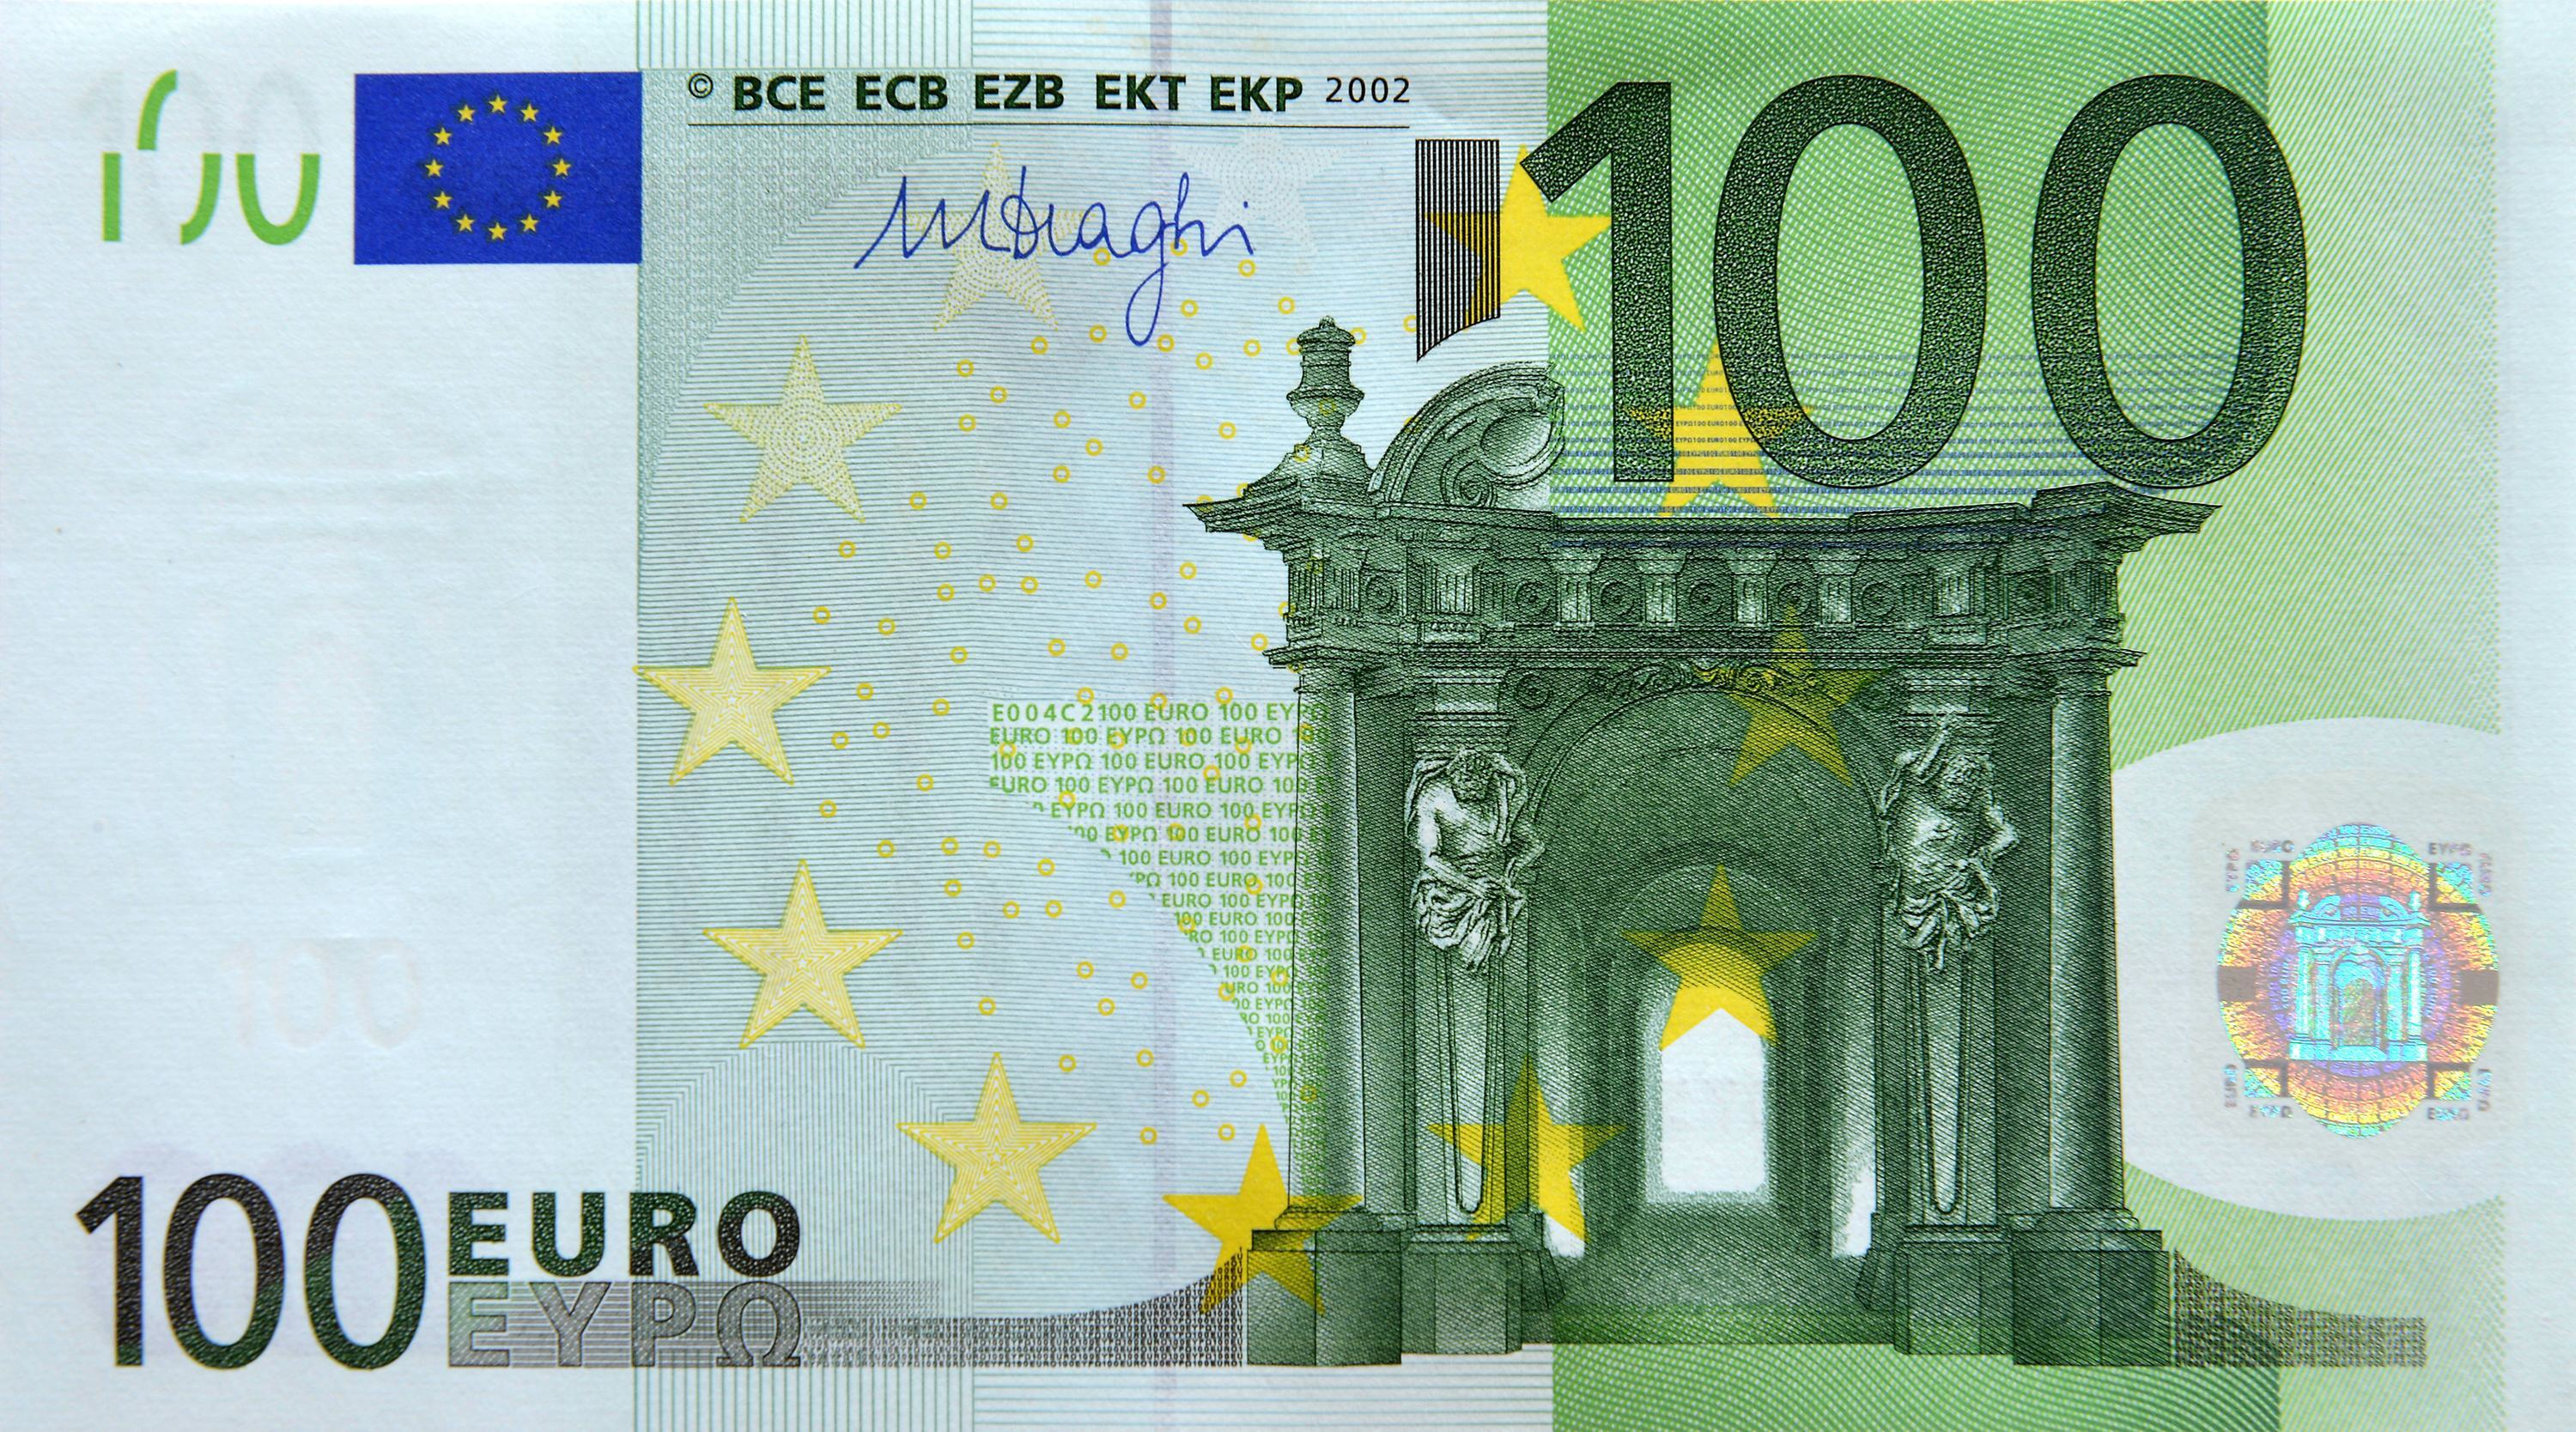 A thumbnail image of 100 Euro note.